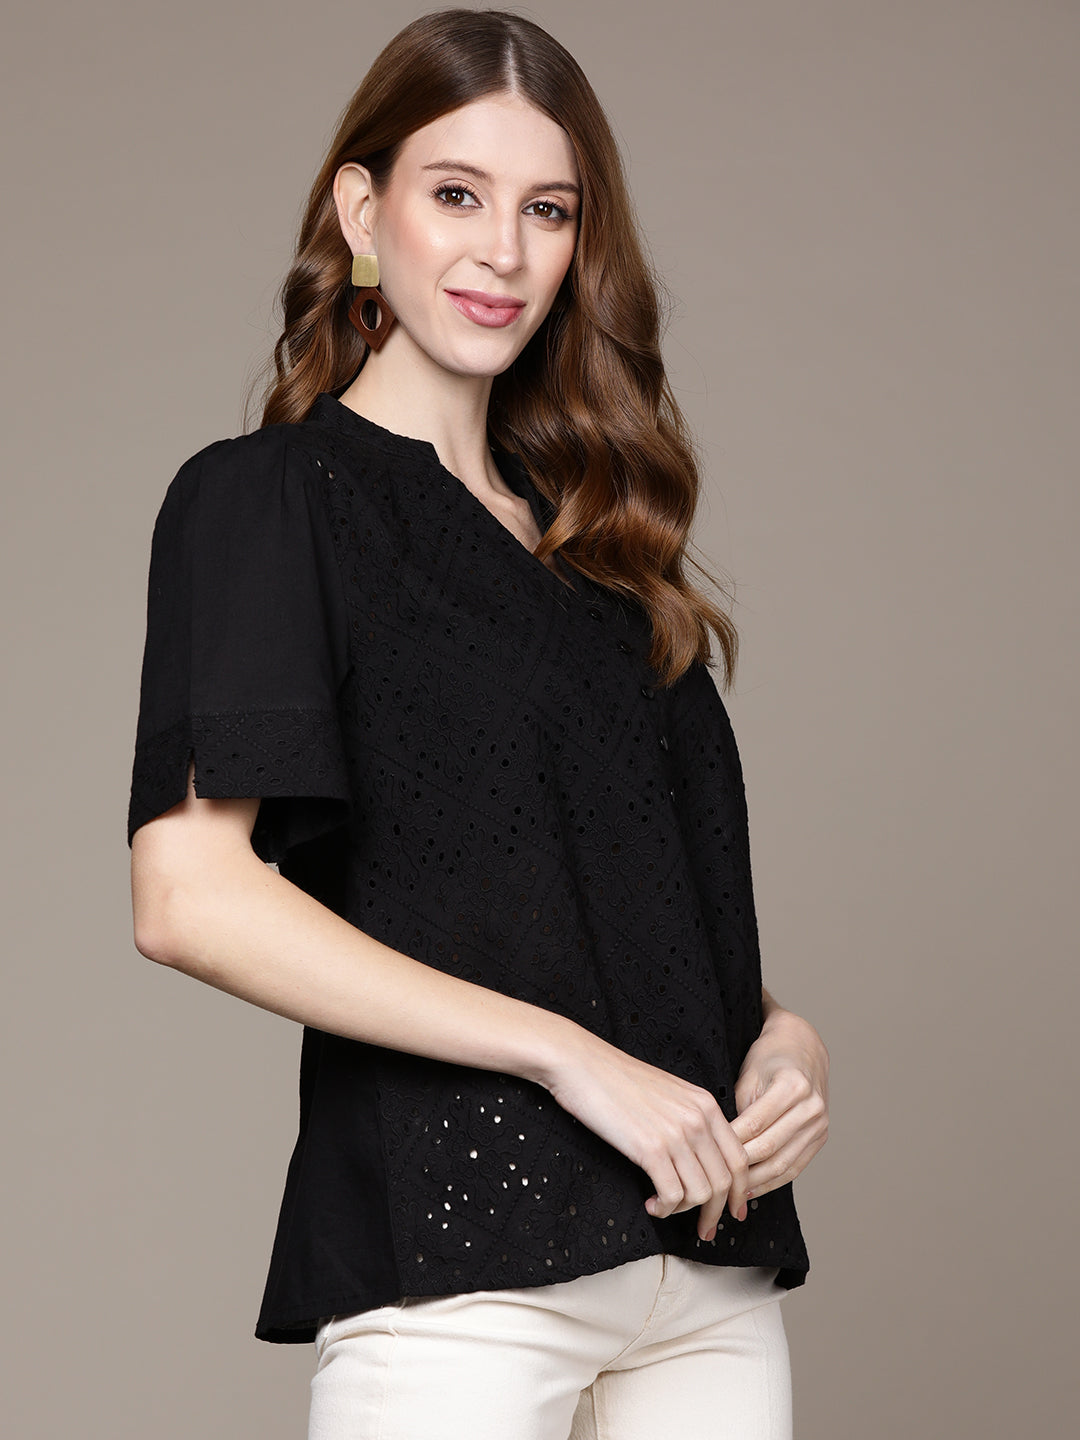 Ishin Women's Black Schiffli Shirt Style Top